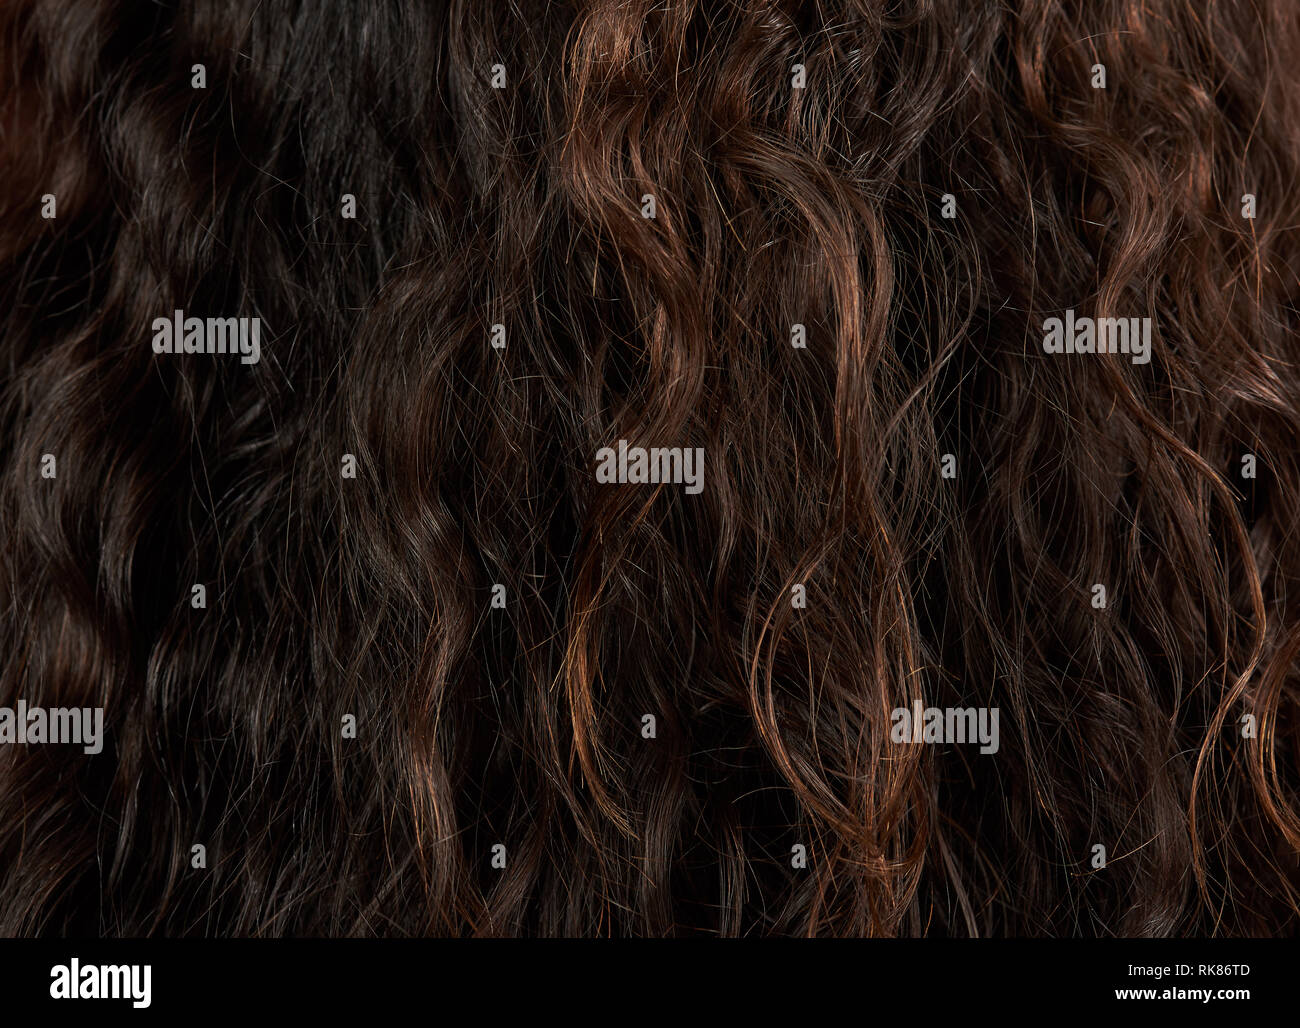 Dark brown woman hair texture close-up view Stock Photo